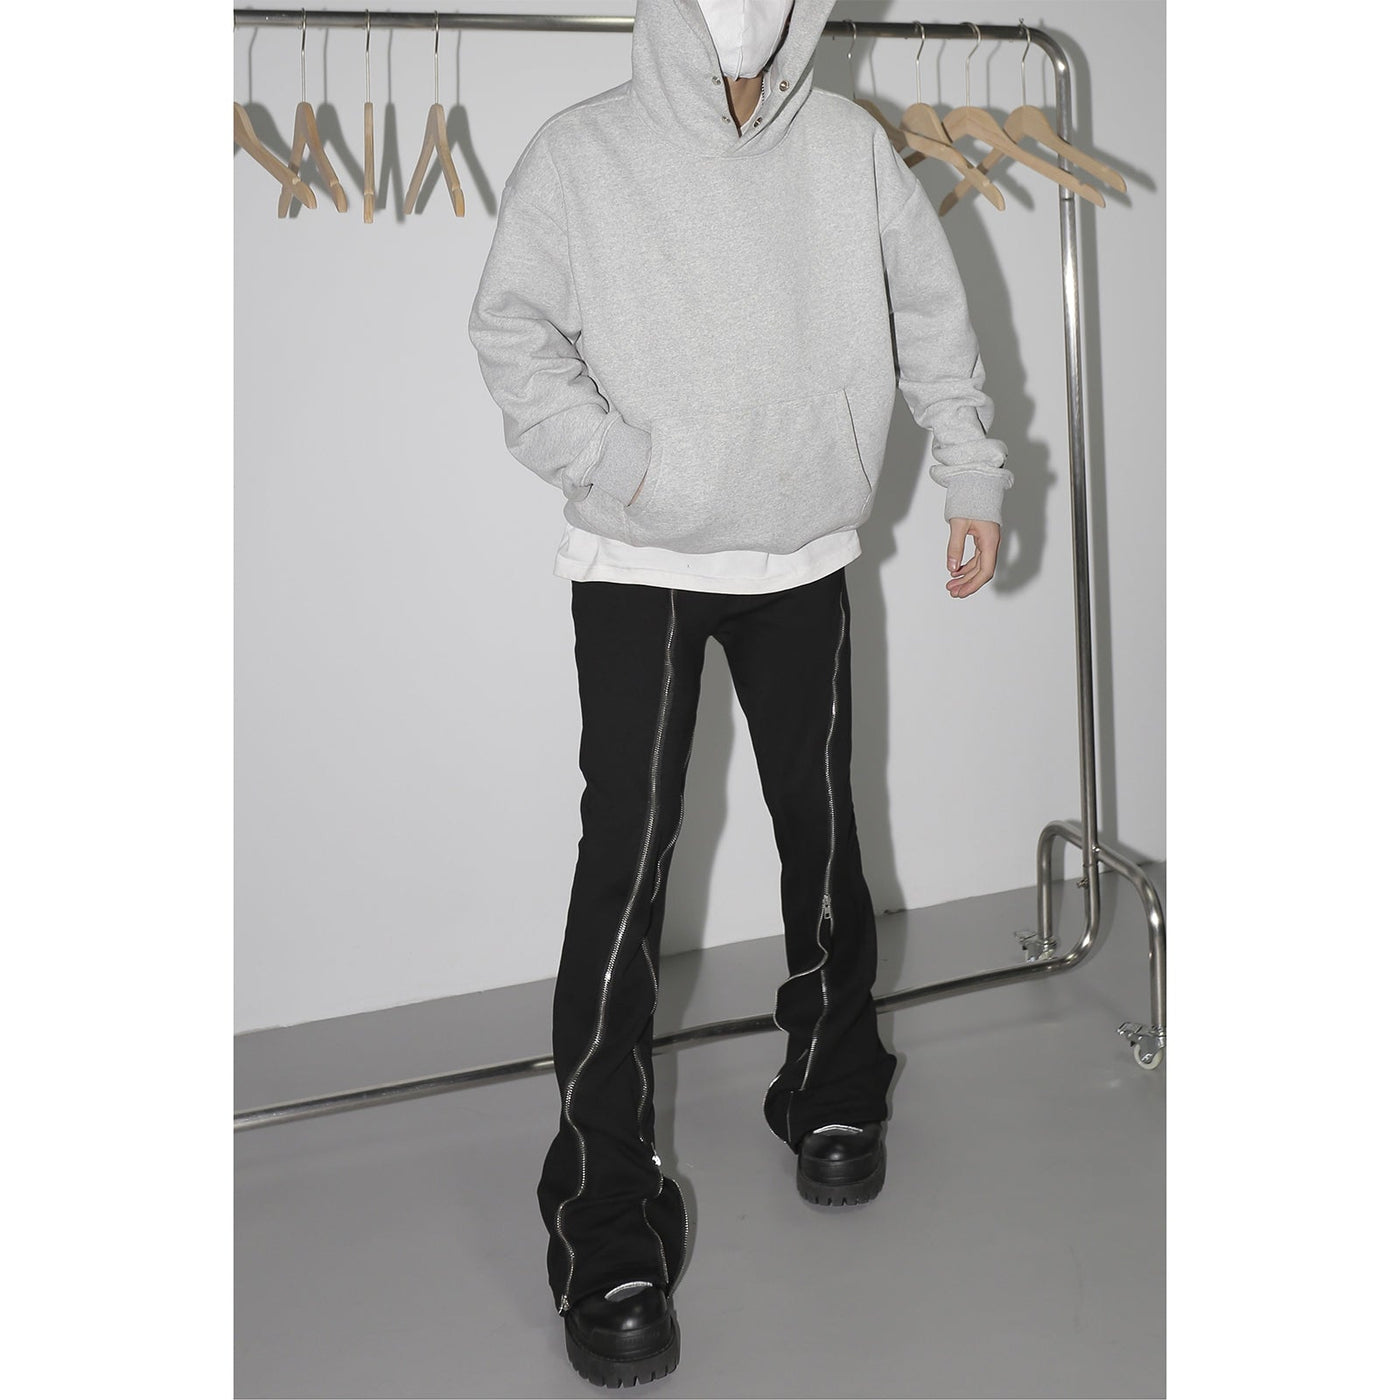 Zipper Detail Pants Korean Street Fashion Pants By Poikilotherm Shop Online at OH Vault